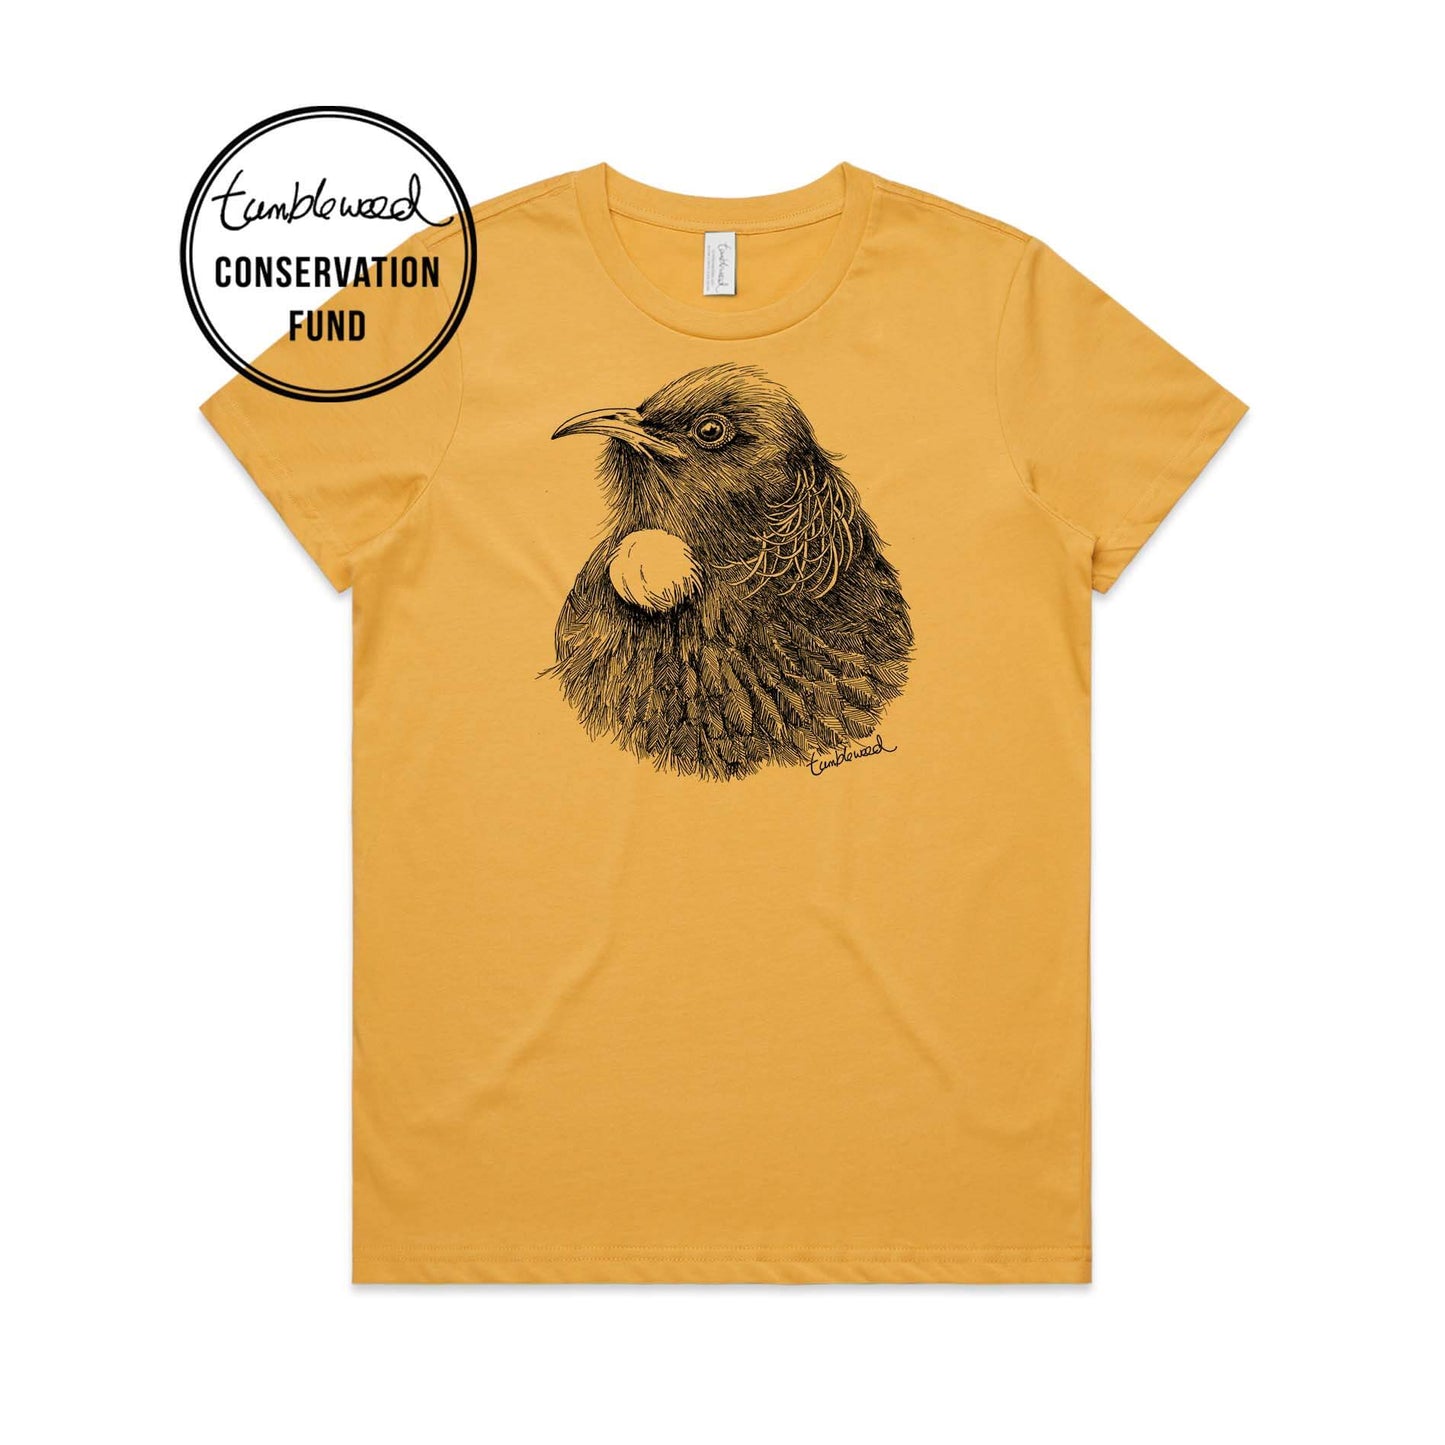 Mustard, female t-shirt featuring a screen printed Tuatara design.